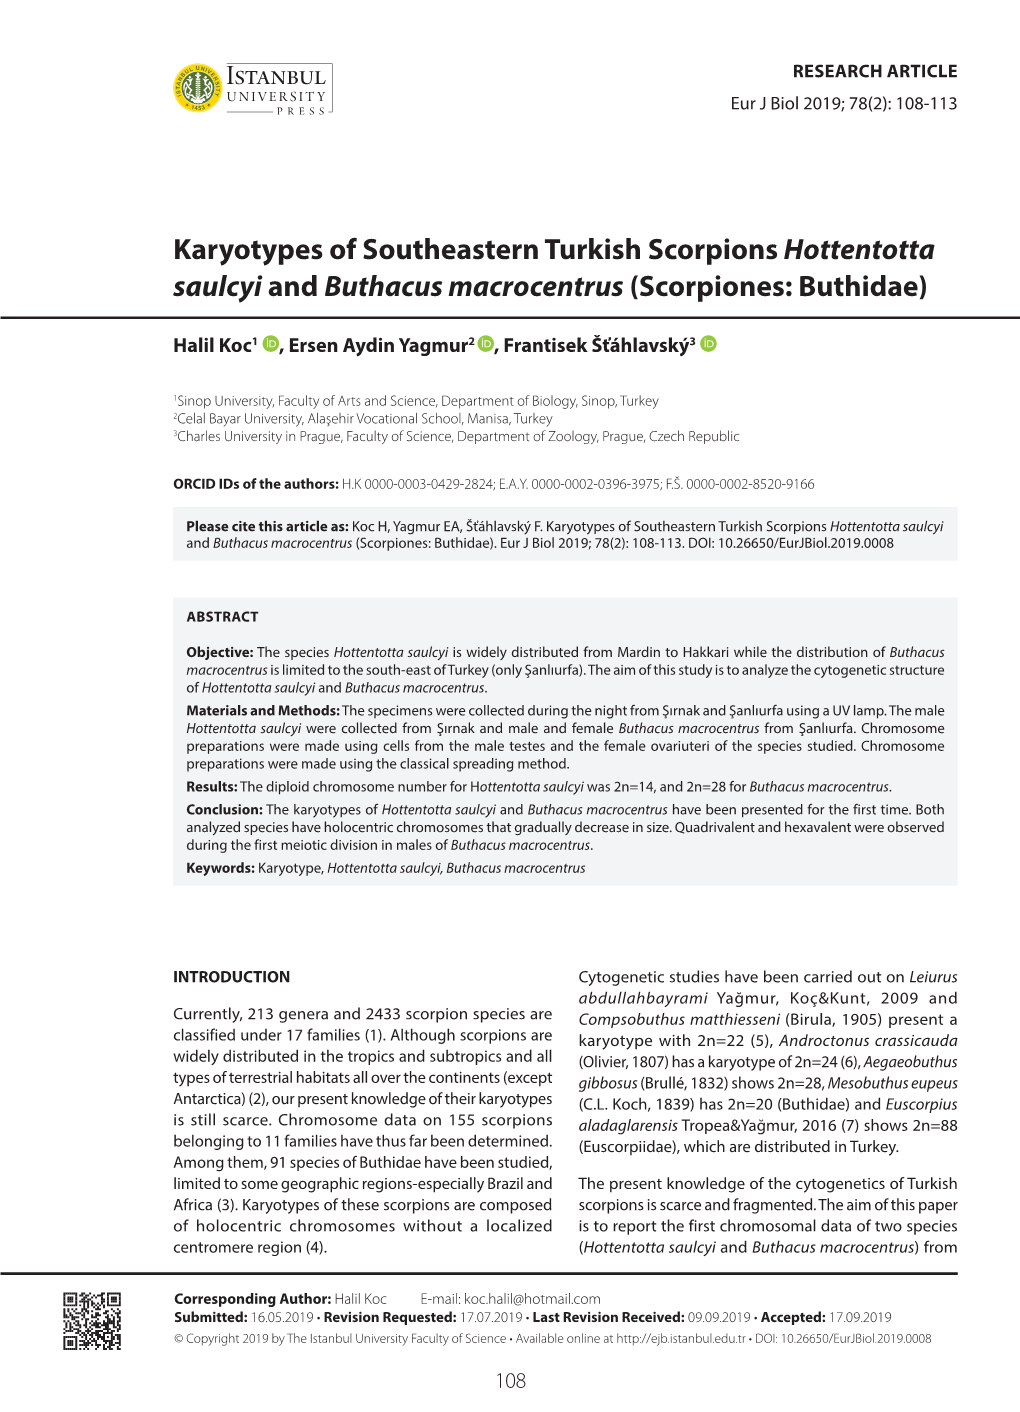 Karyotypes of Southeastern Turkish Scorpions Hottentotta Saulcyi and Buthacus Macrocentrus (Scorpiones: Buthidae)